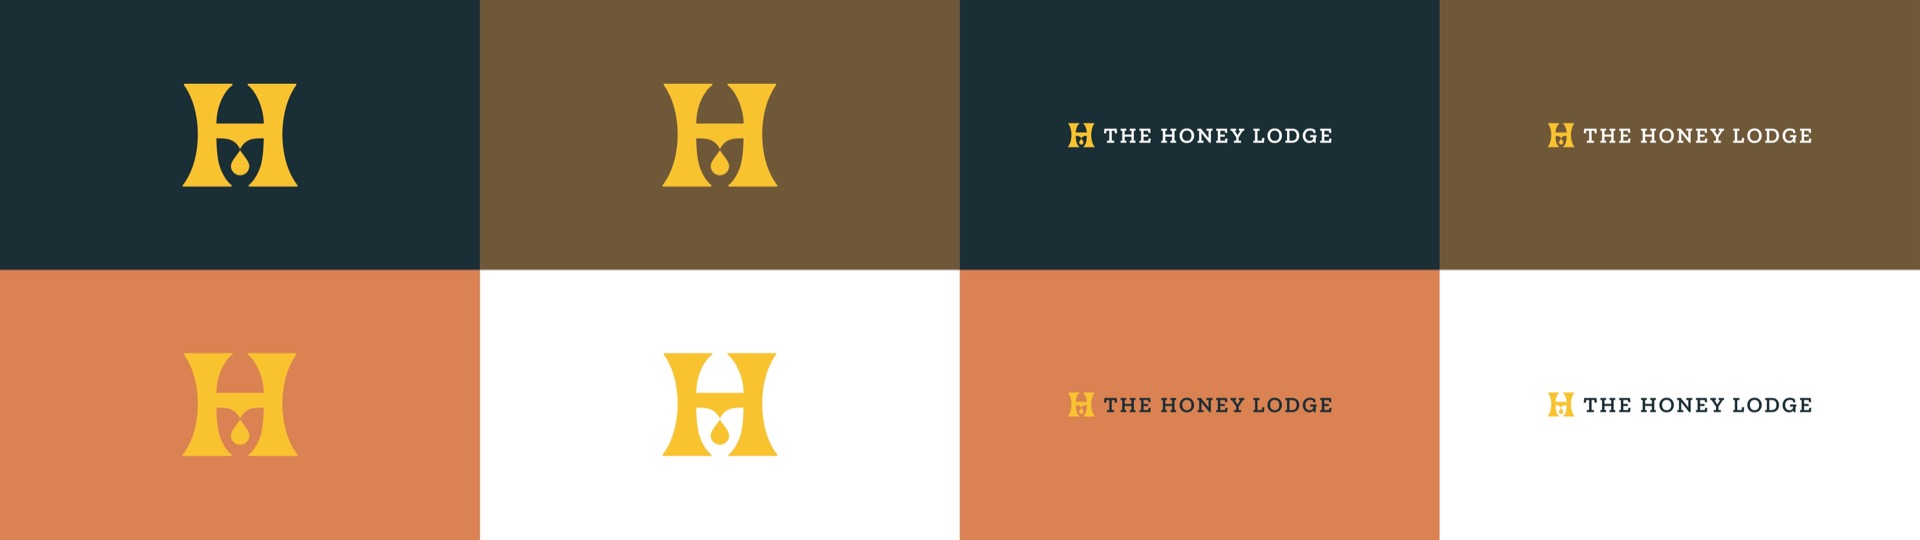 Honey Lodge - Brand Guide 24